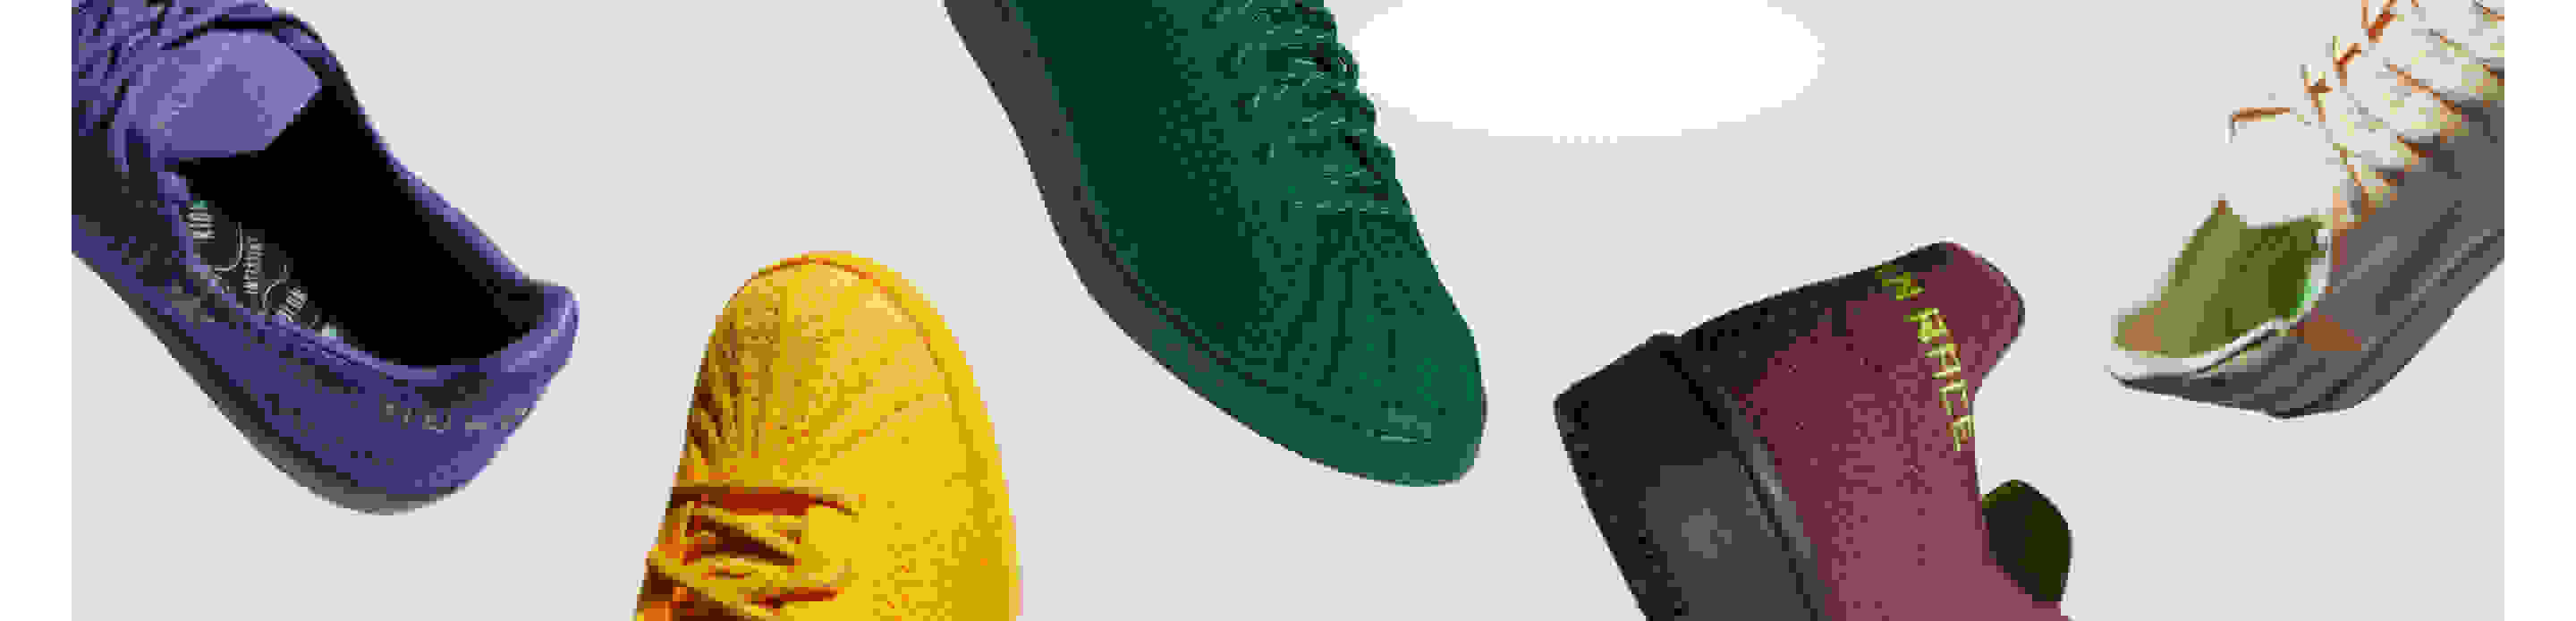 adidas pharrell williams shop online